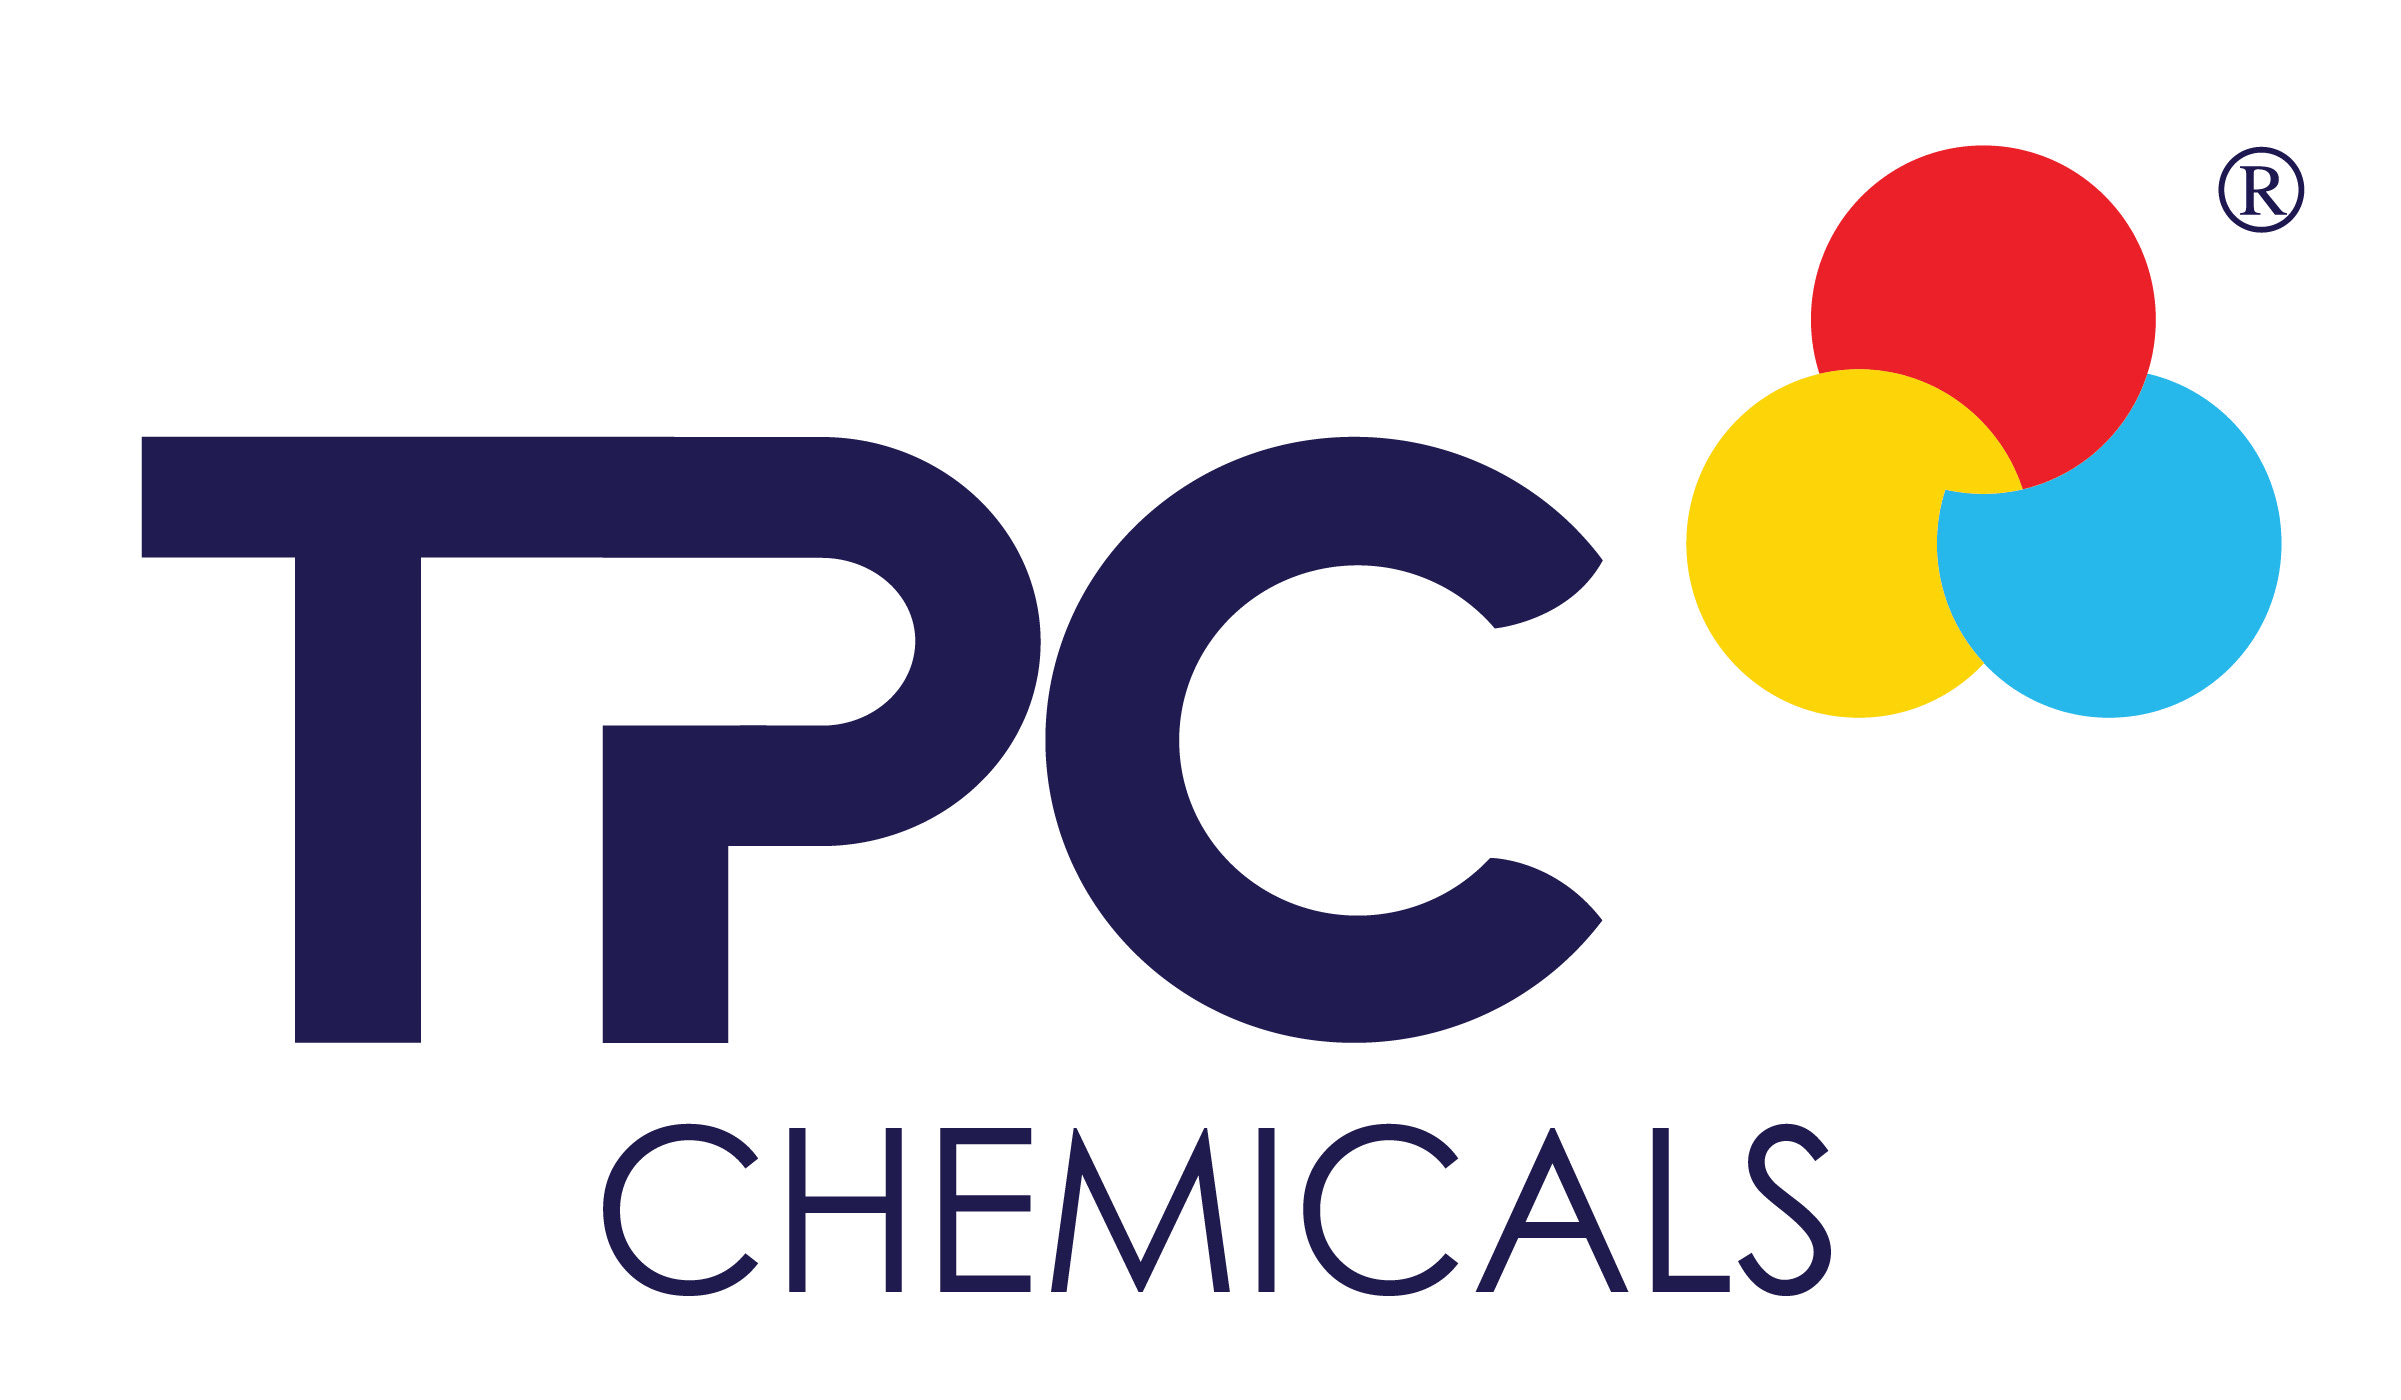 Tan Phu Cuong Chemicals Company Limited